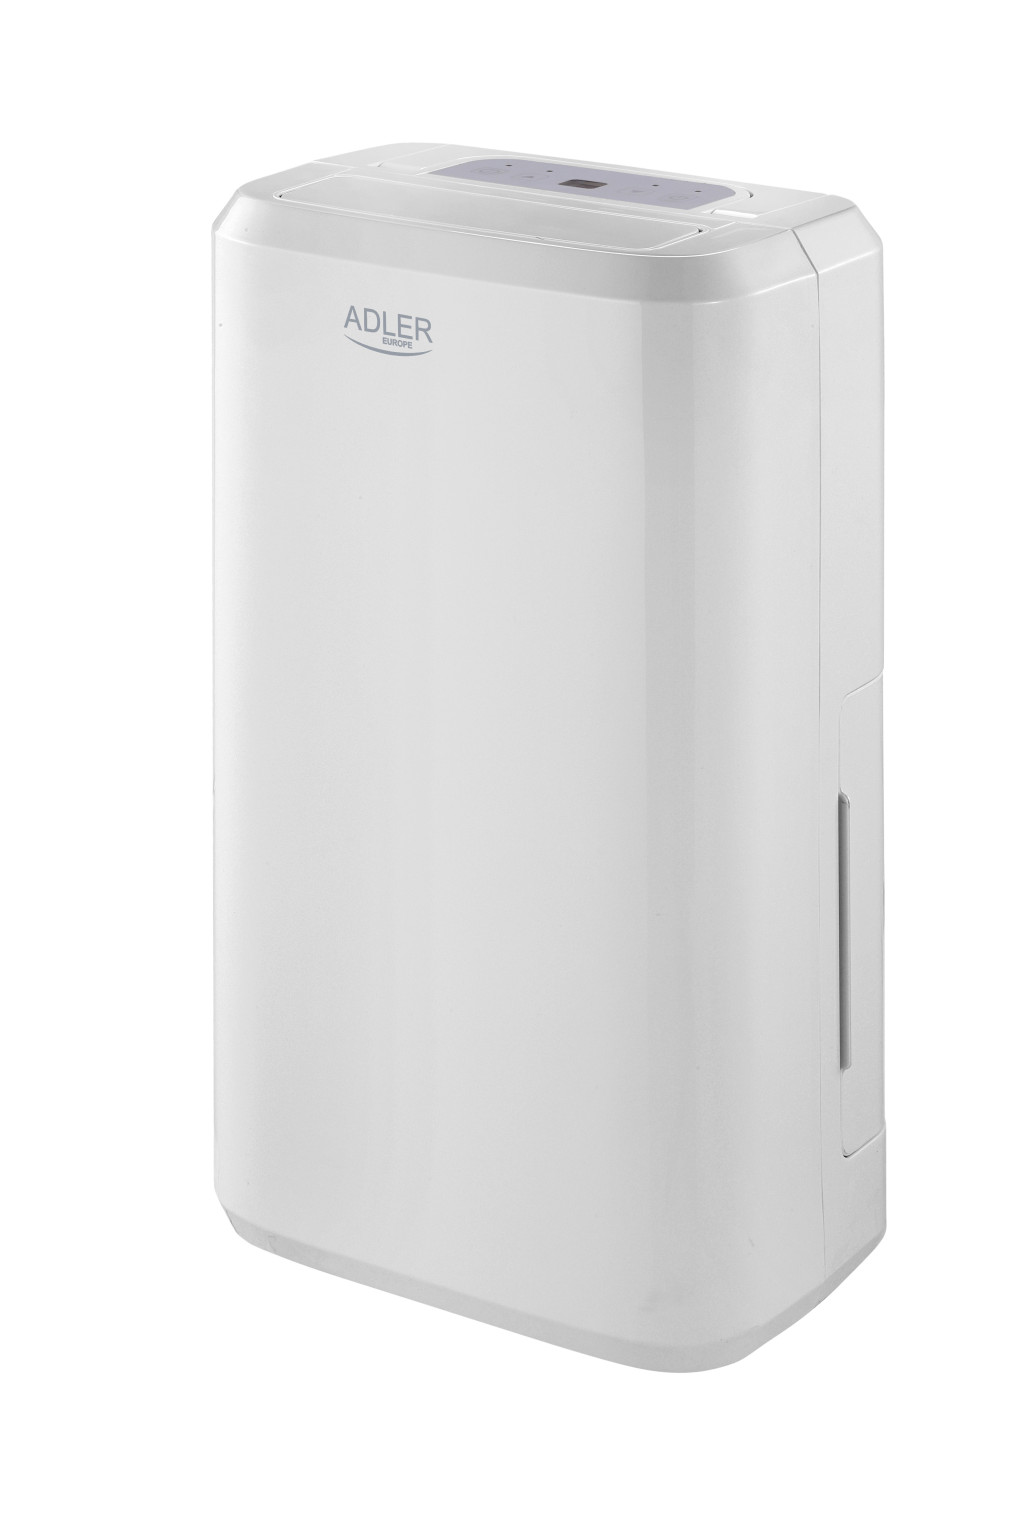 Adler | Compressor Air Dehumidifier | AD 7861 | Power 280 W | Suitable for rooms up to 60 m³ | Suitable for rooms up to  m² | Water tank capacity 2 L | White